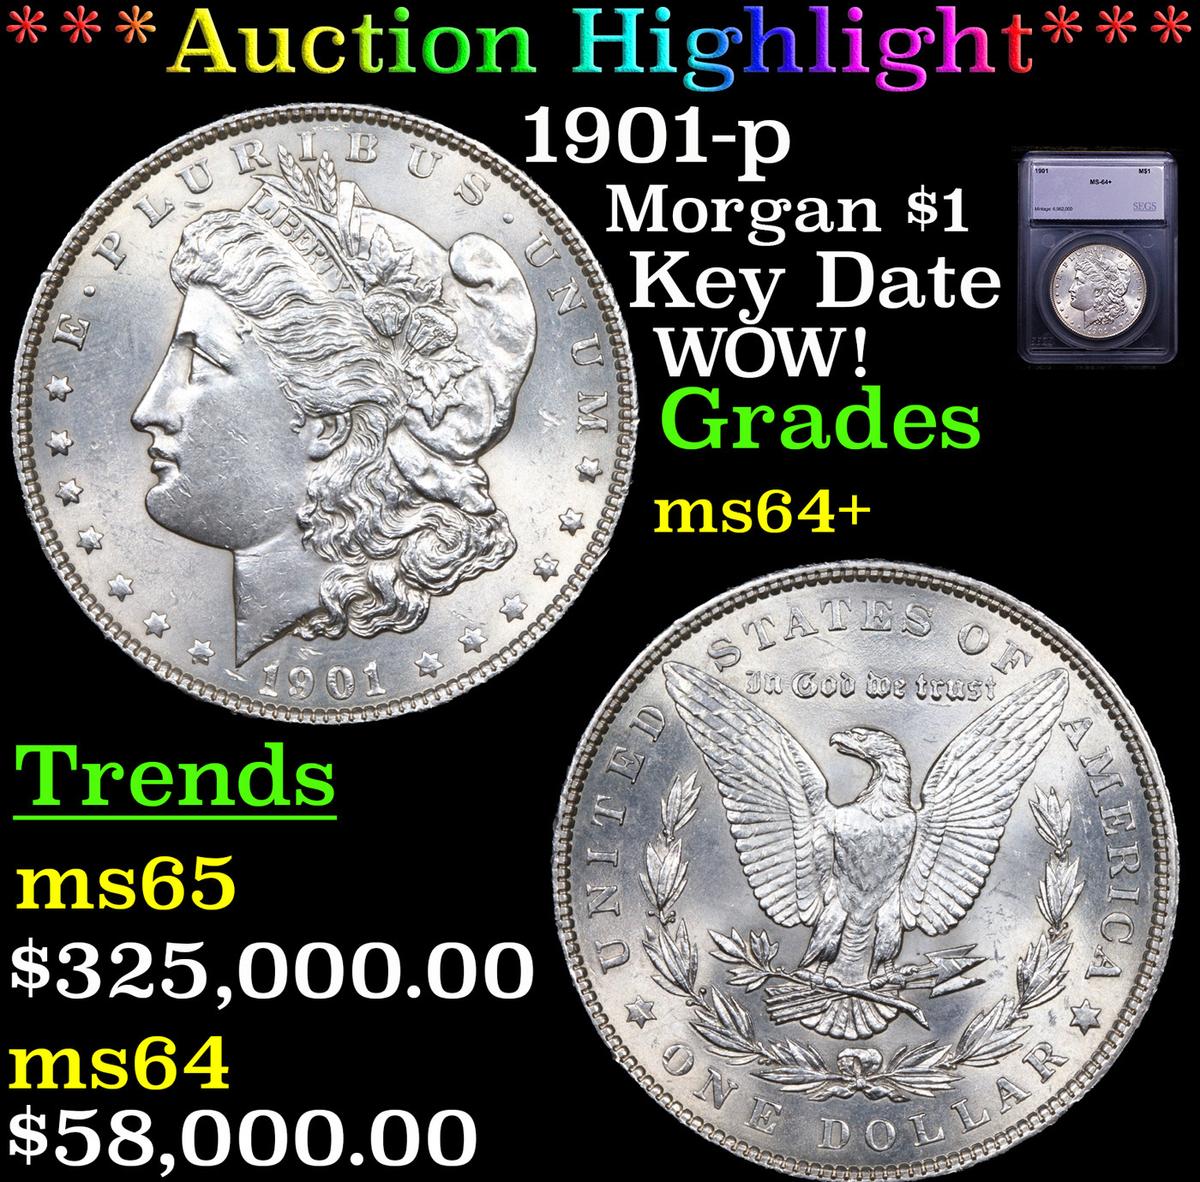 ***Auction Highlight*** 1901-p Morgan Dollar $1 Graded ms64+ By SEGS (fc)